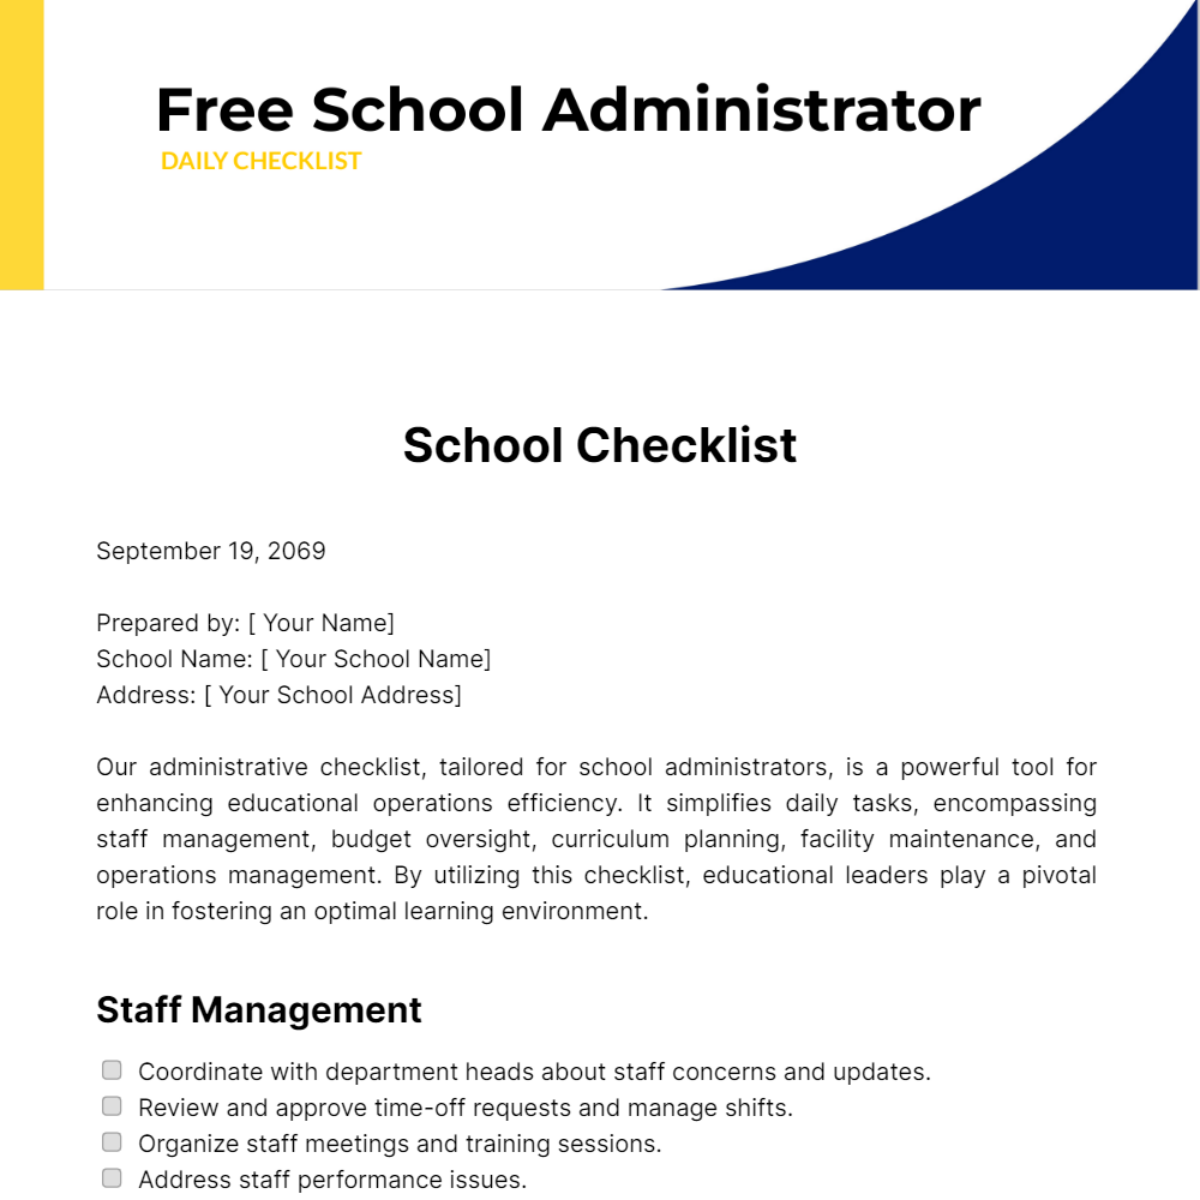 Free School Administrator Daily Checklist Template